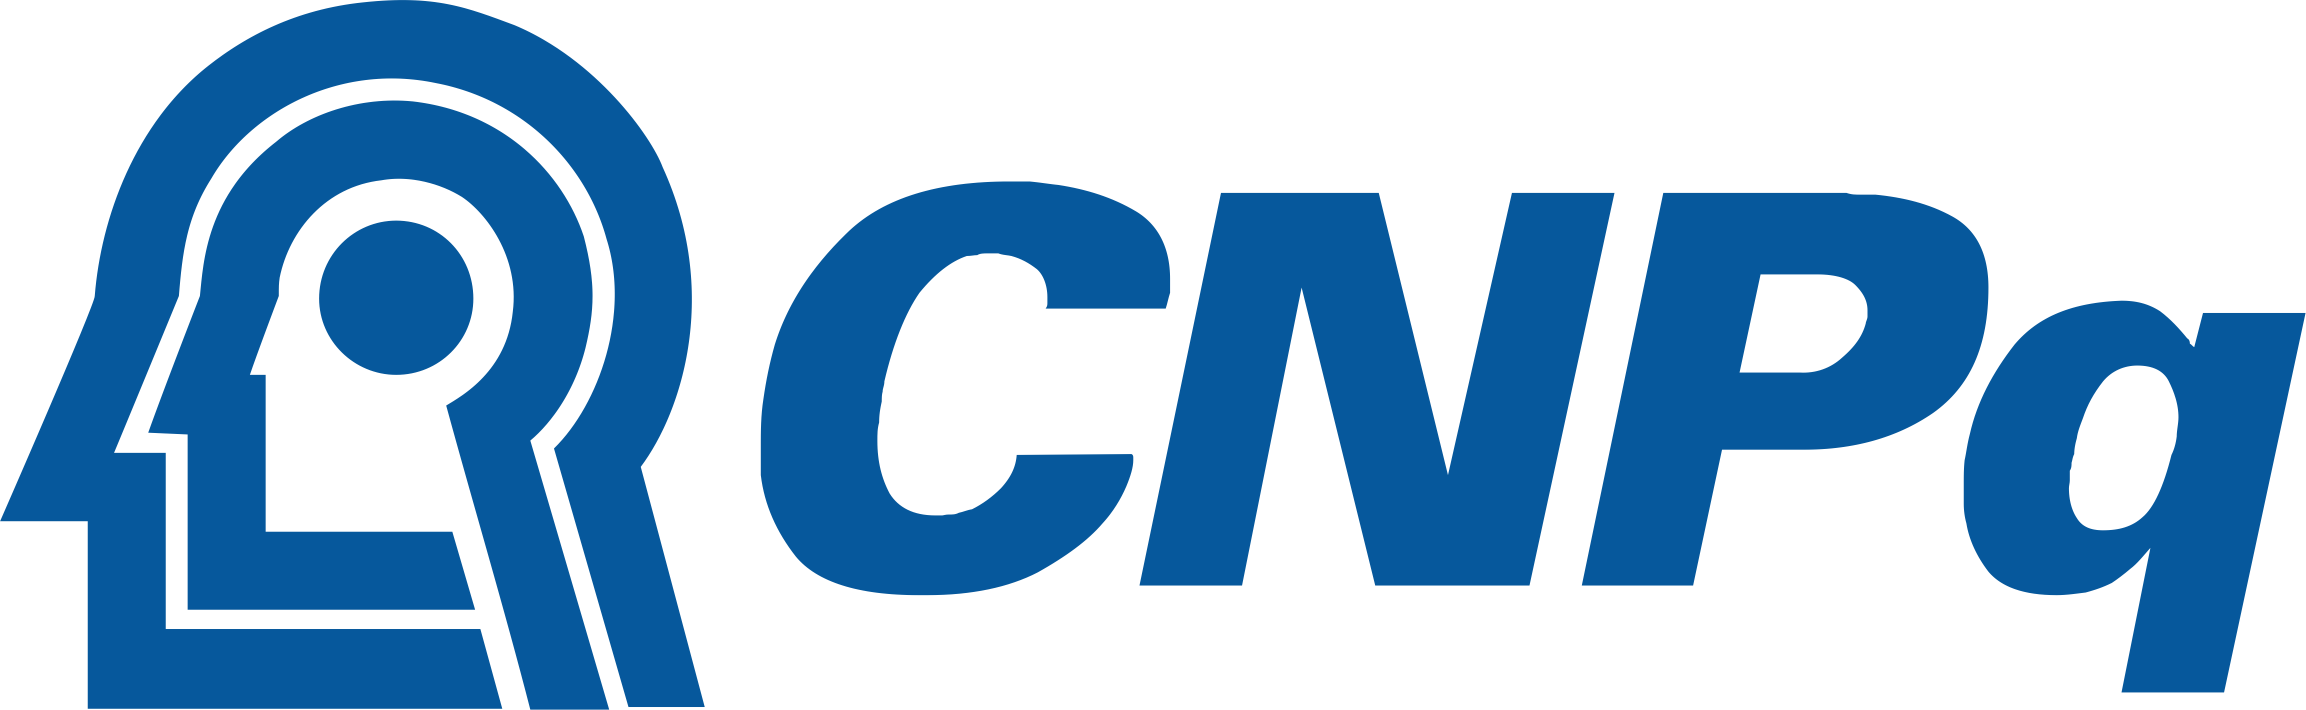 Logotipo CNPQ